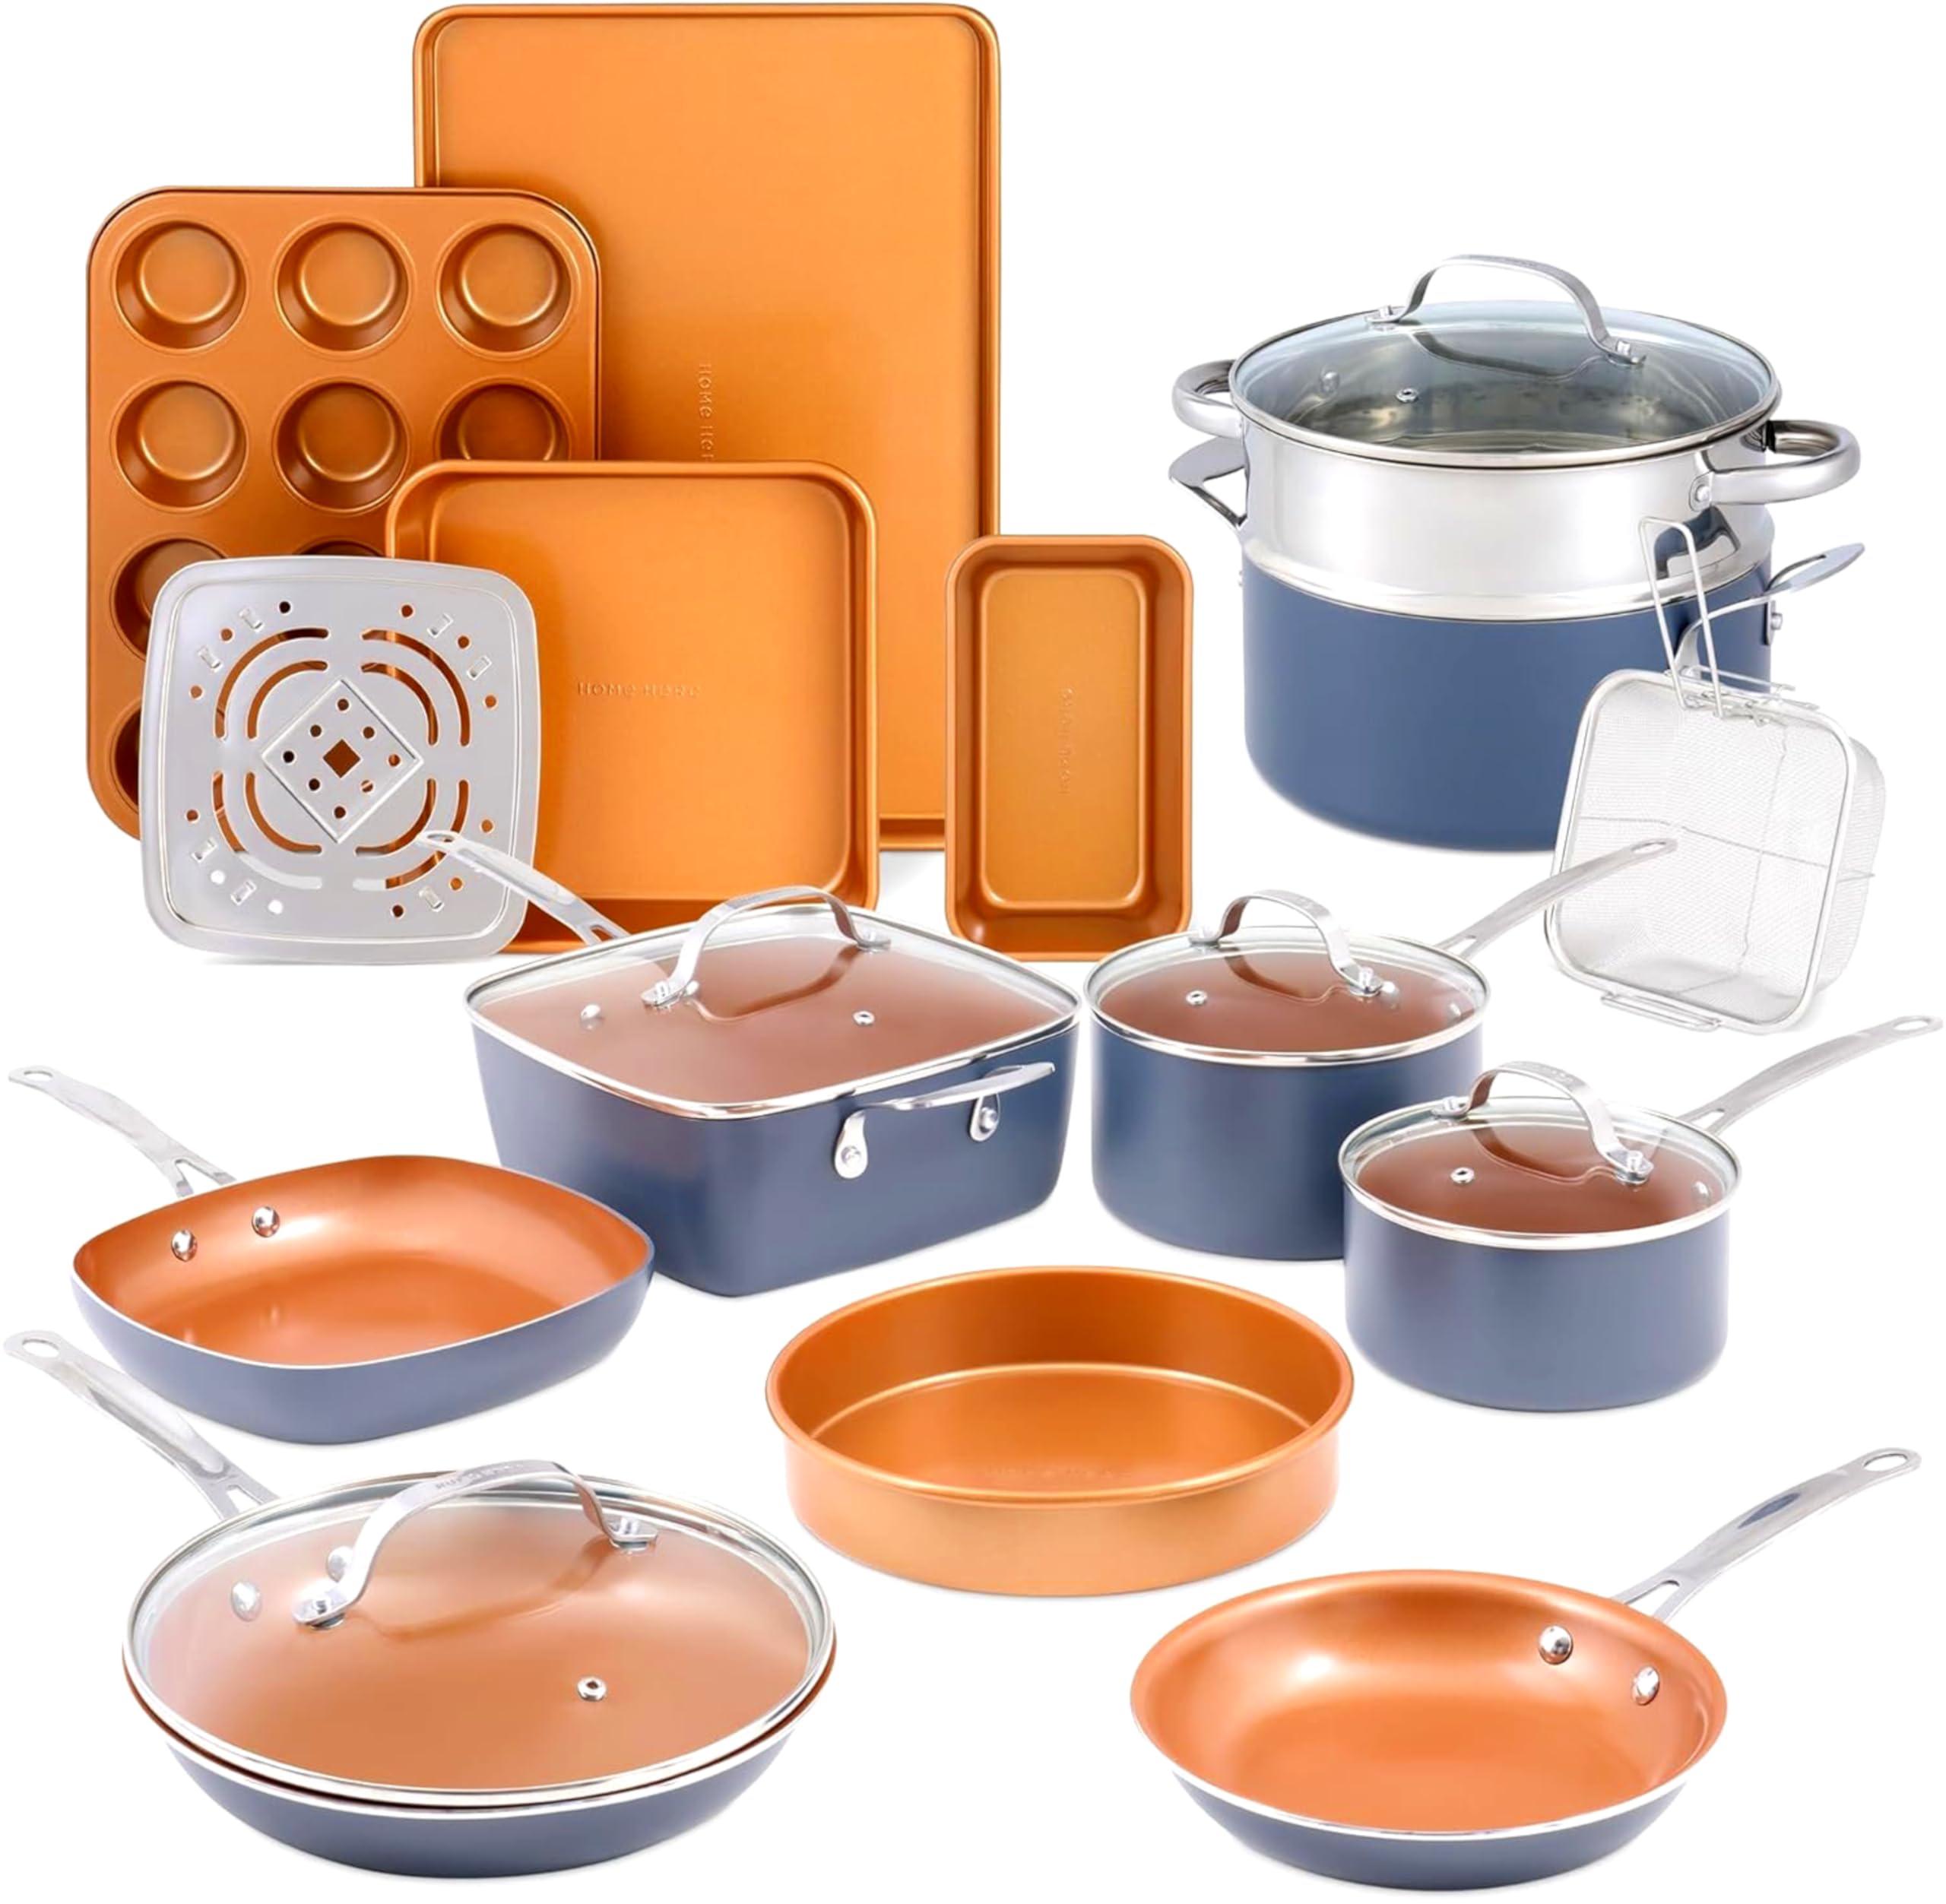 Home Hero pots and pans set nonstick - 20 pcs professional copper cookware set - induction kitchen cookware sets - pot and pan set - no